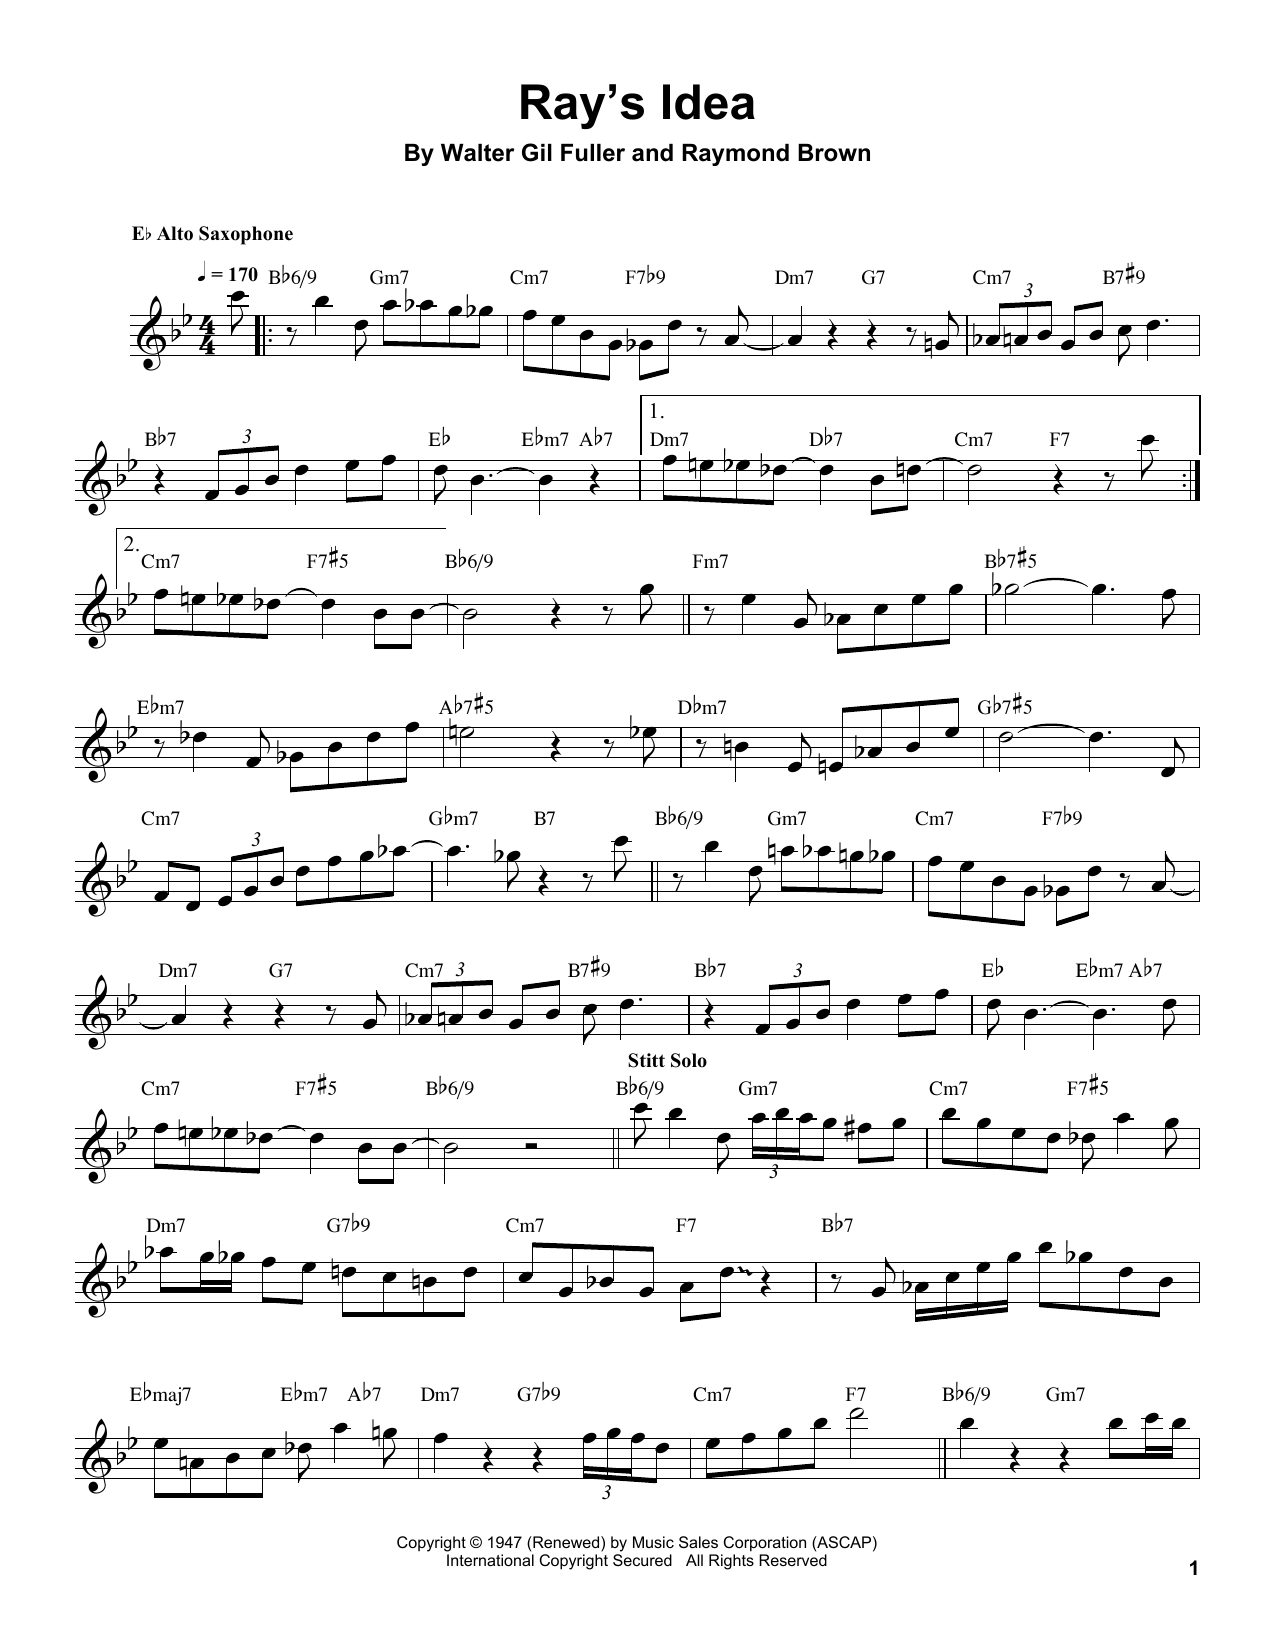 Sonny Stitt Ray's Idea Sheet Music Notes & Chords for Tenor Sax Transcription - Download or Print PDF